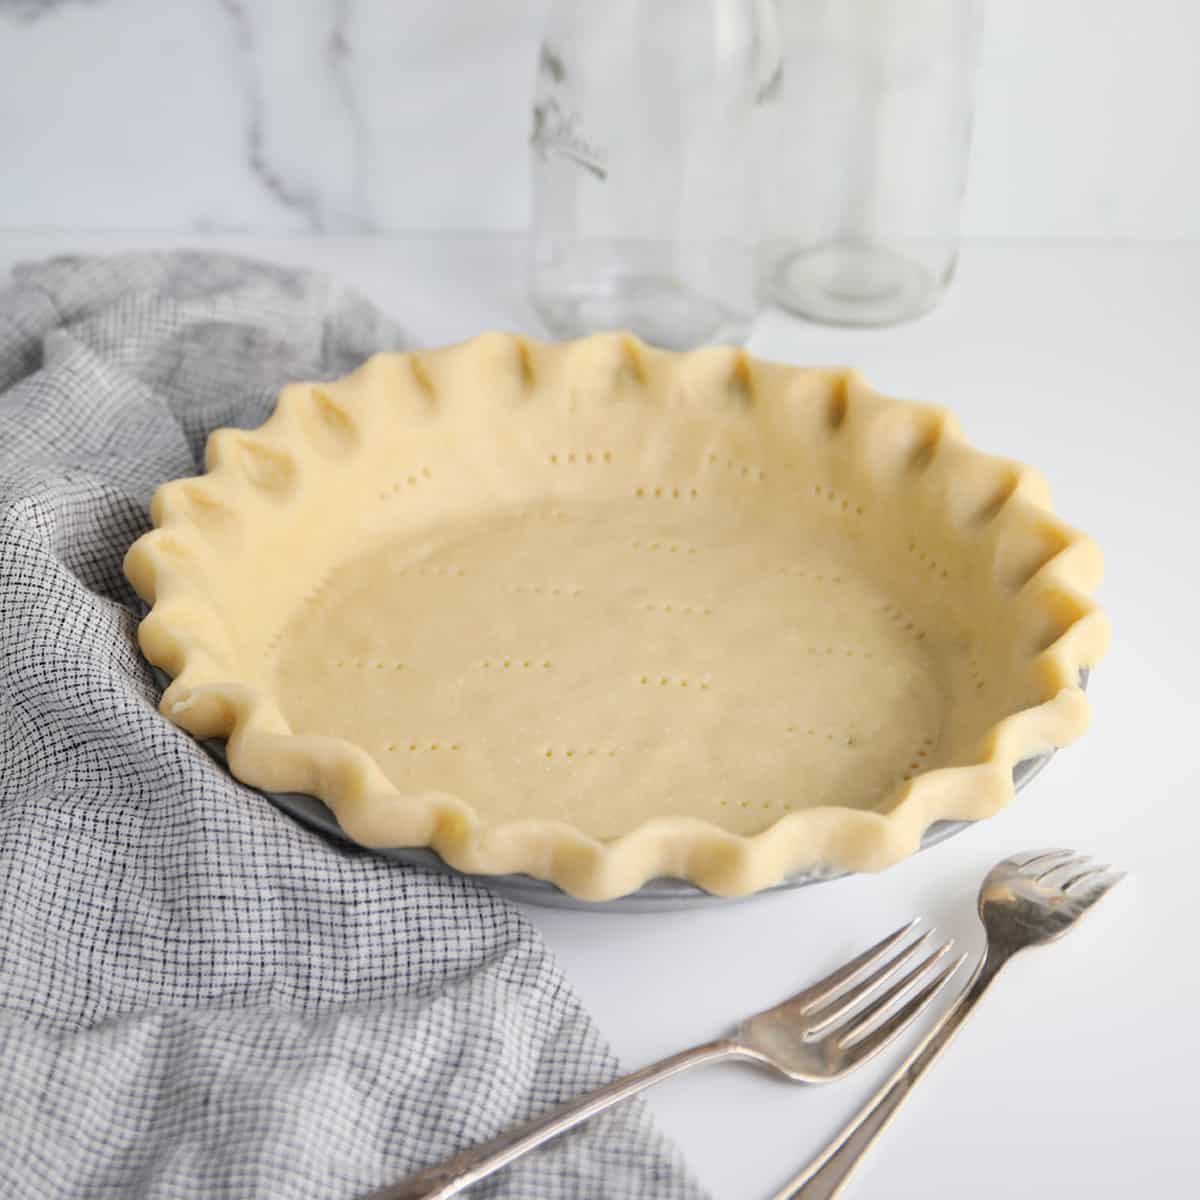 https://www.momlovesbaking.com/wp-content/uploads/2020/10/Homemade-Pie-Crust-SQ.jpg